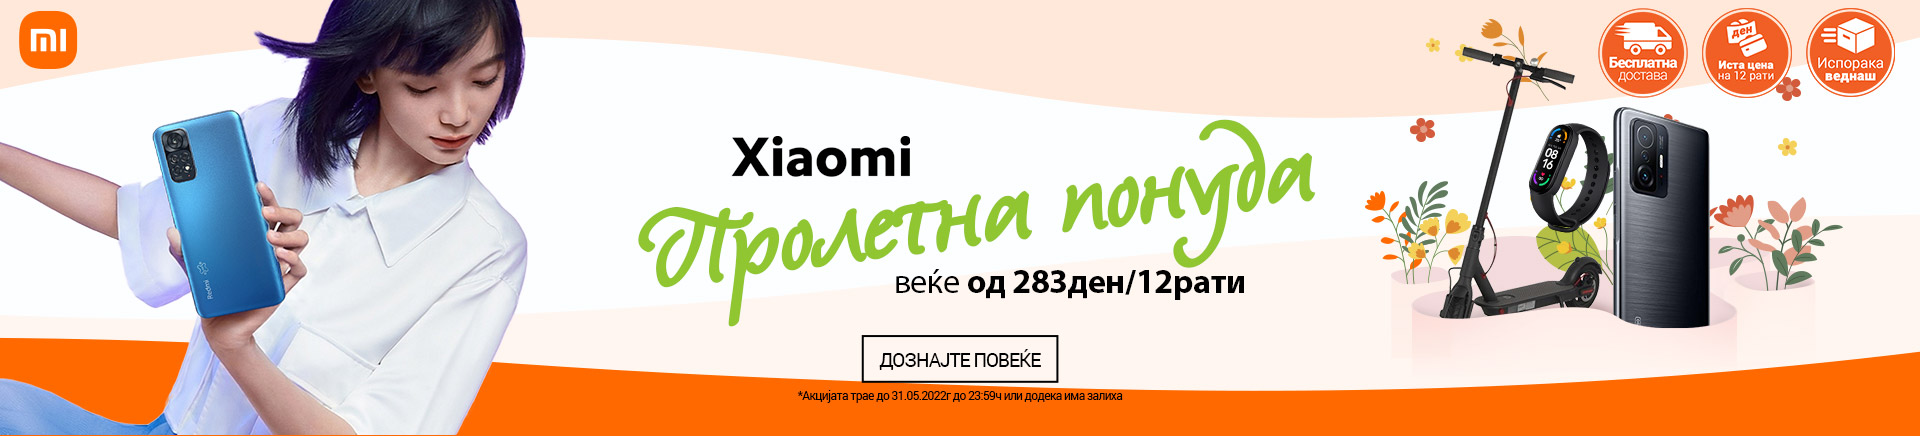 MK Xiaomi mix ponuda WIDESCREEN 1920 X 436.jpg